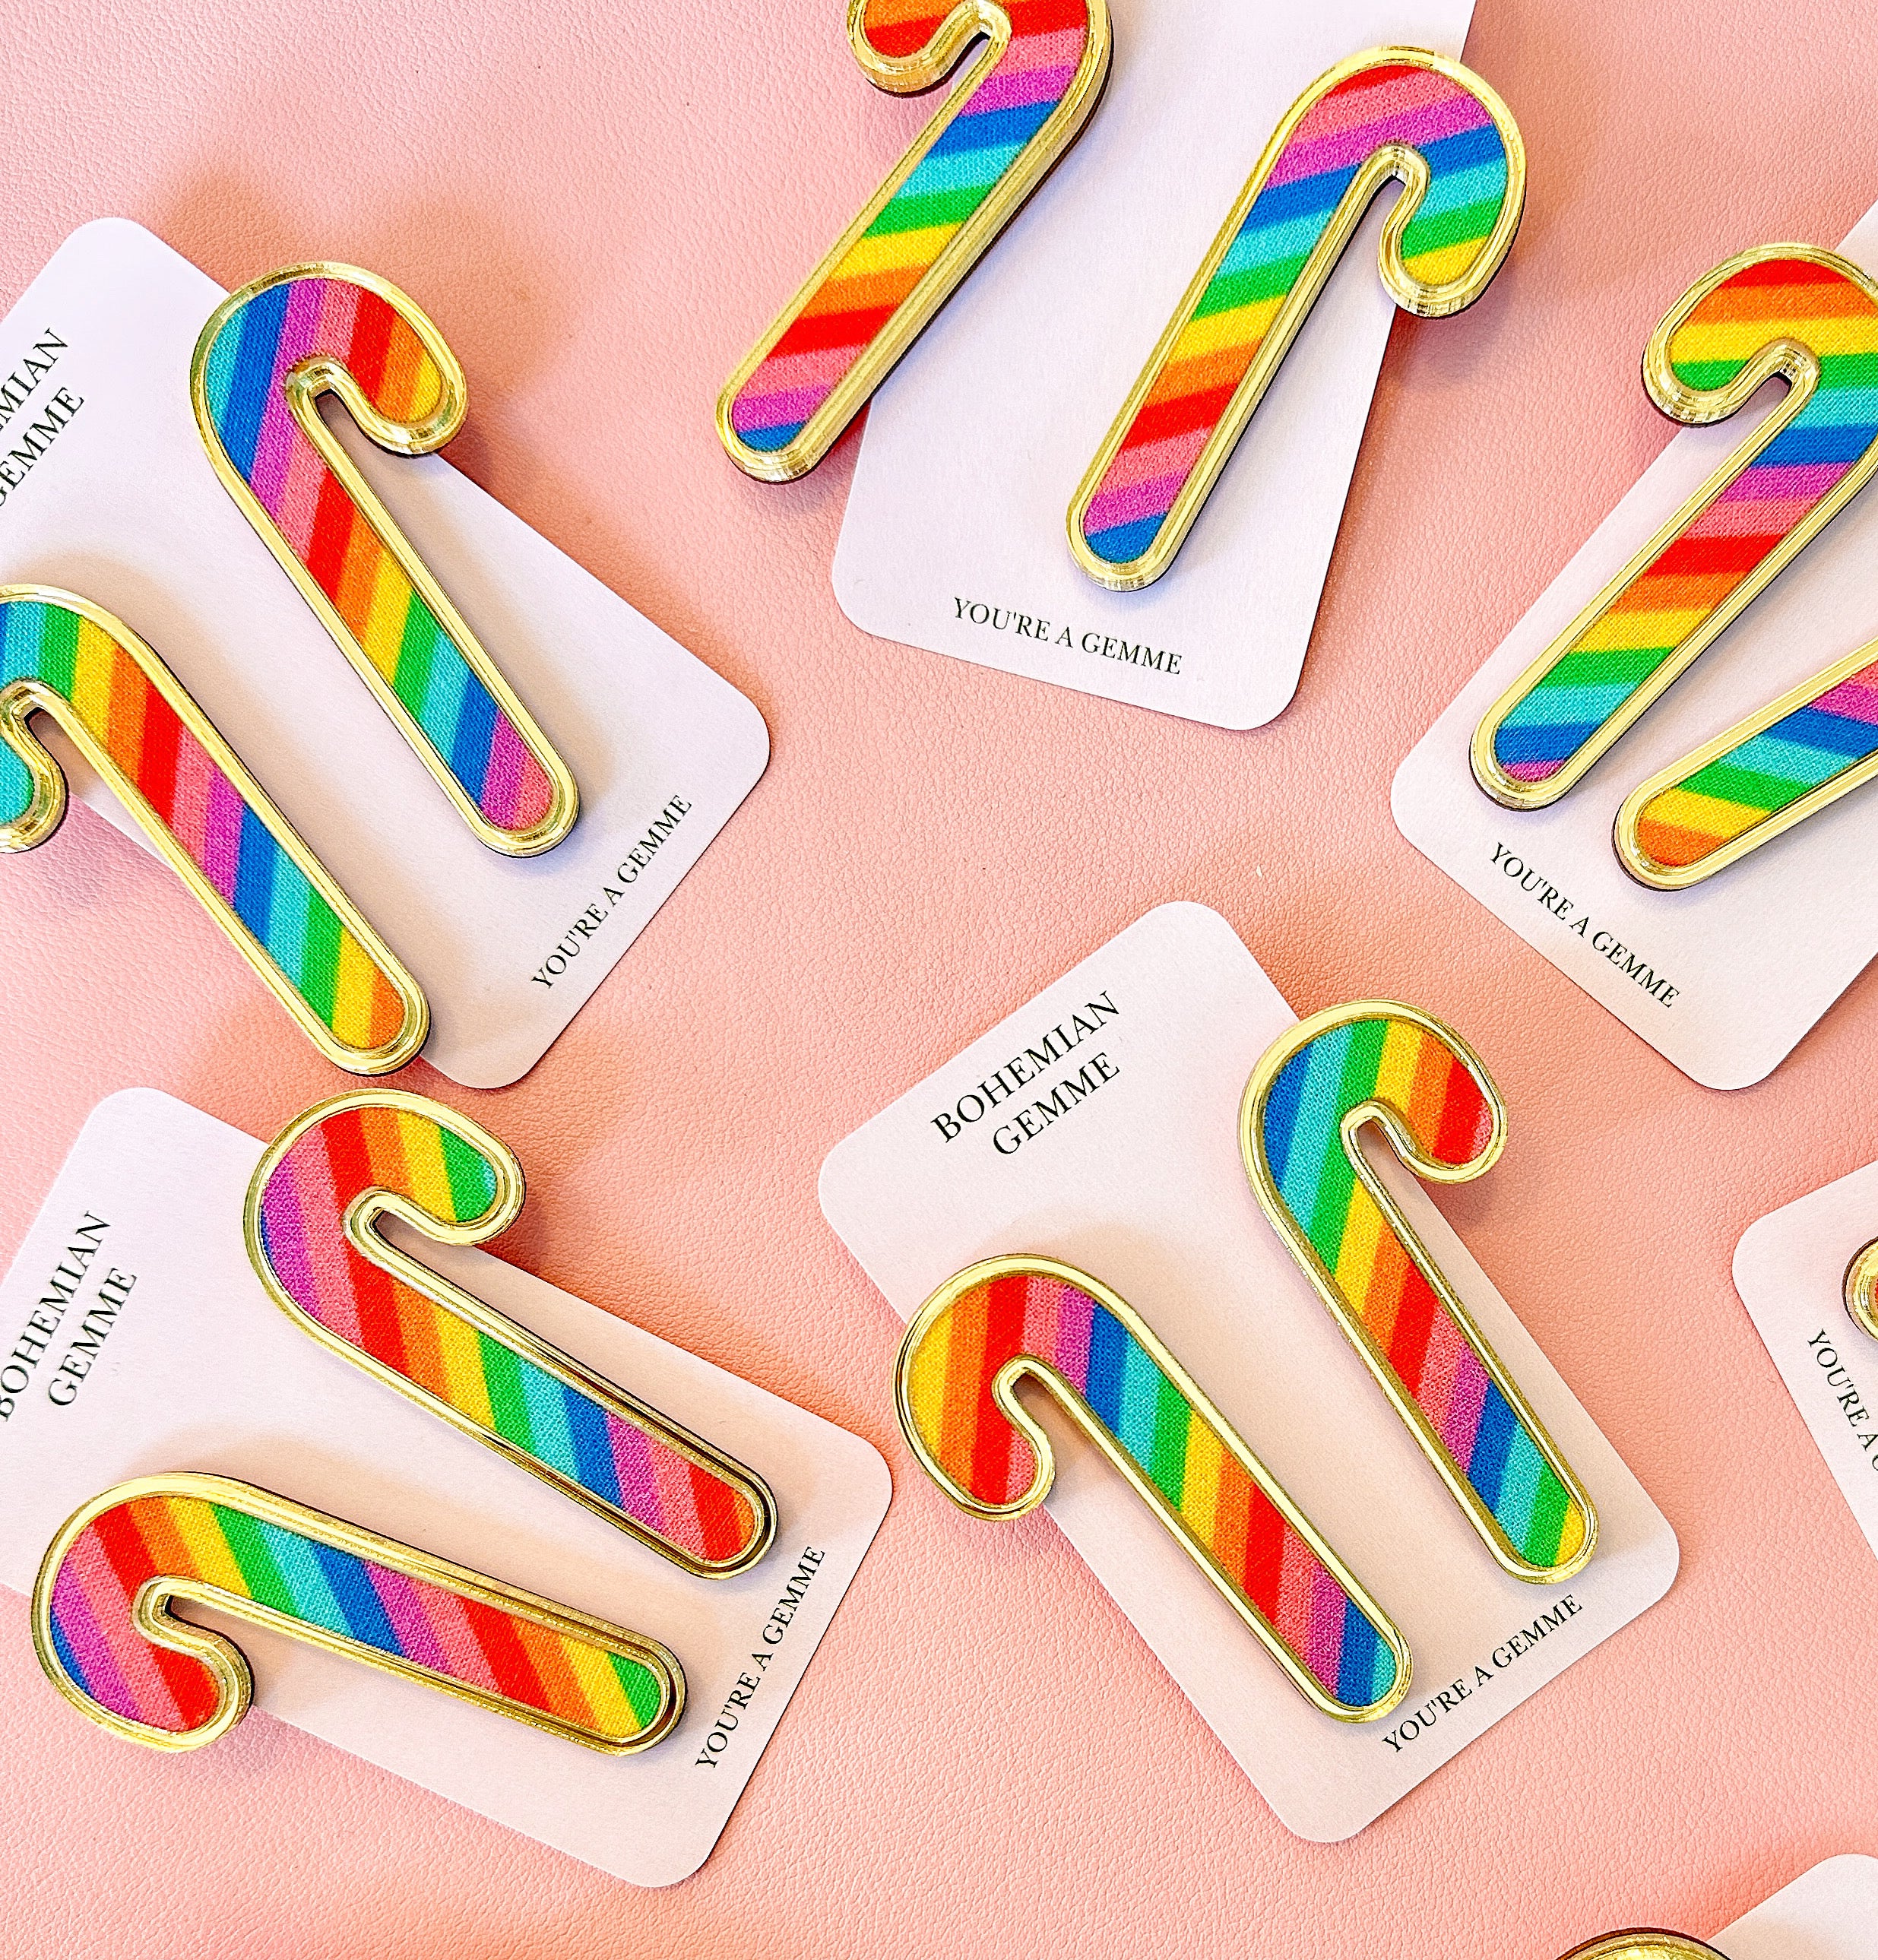 Rainbow Candy Cane Earrings